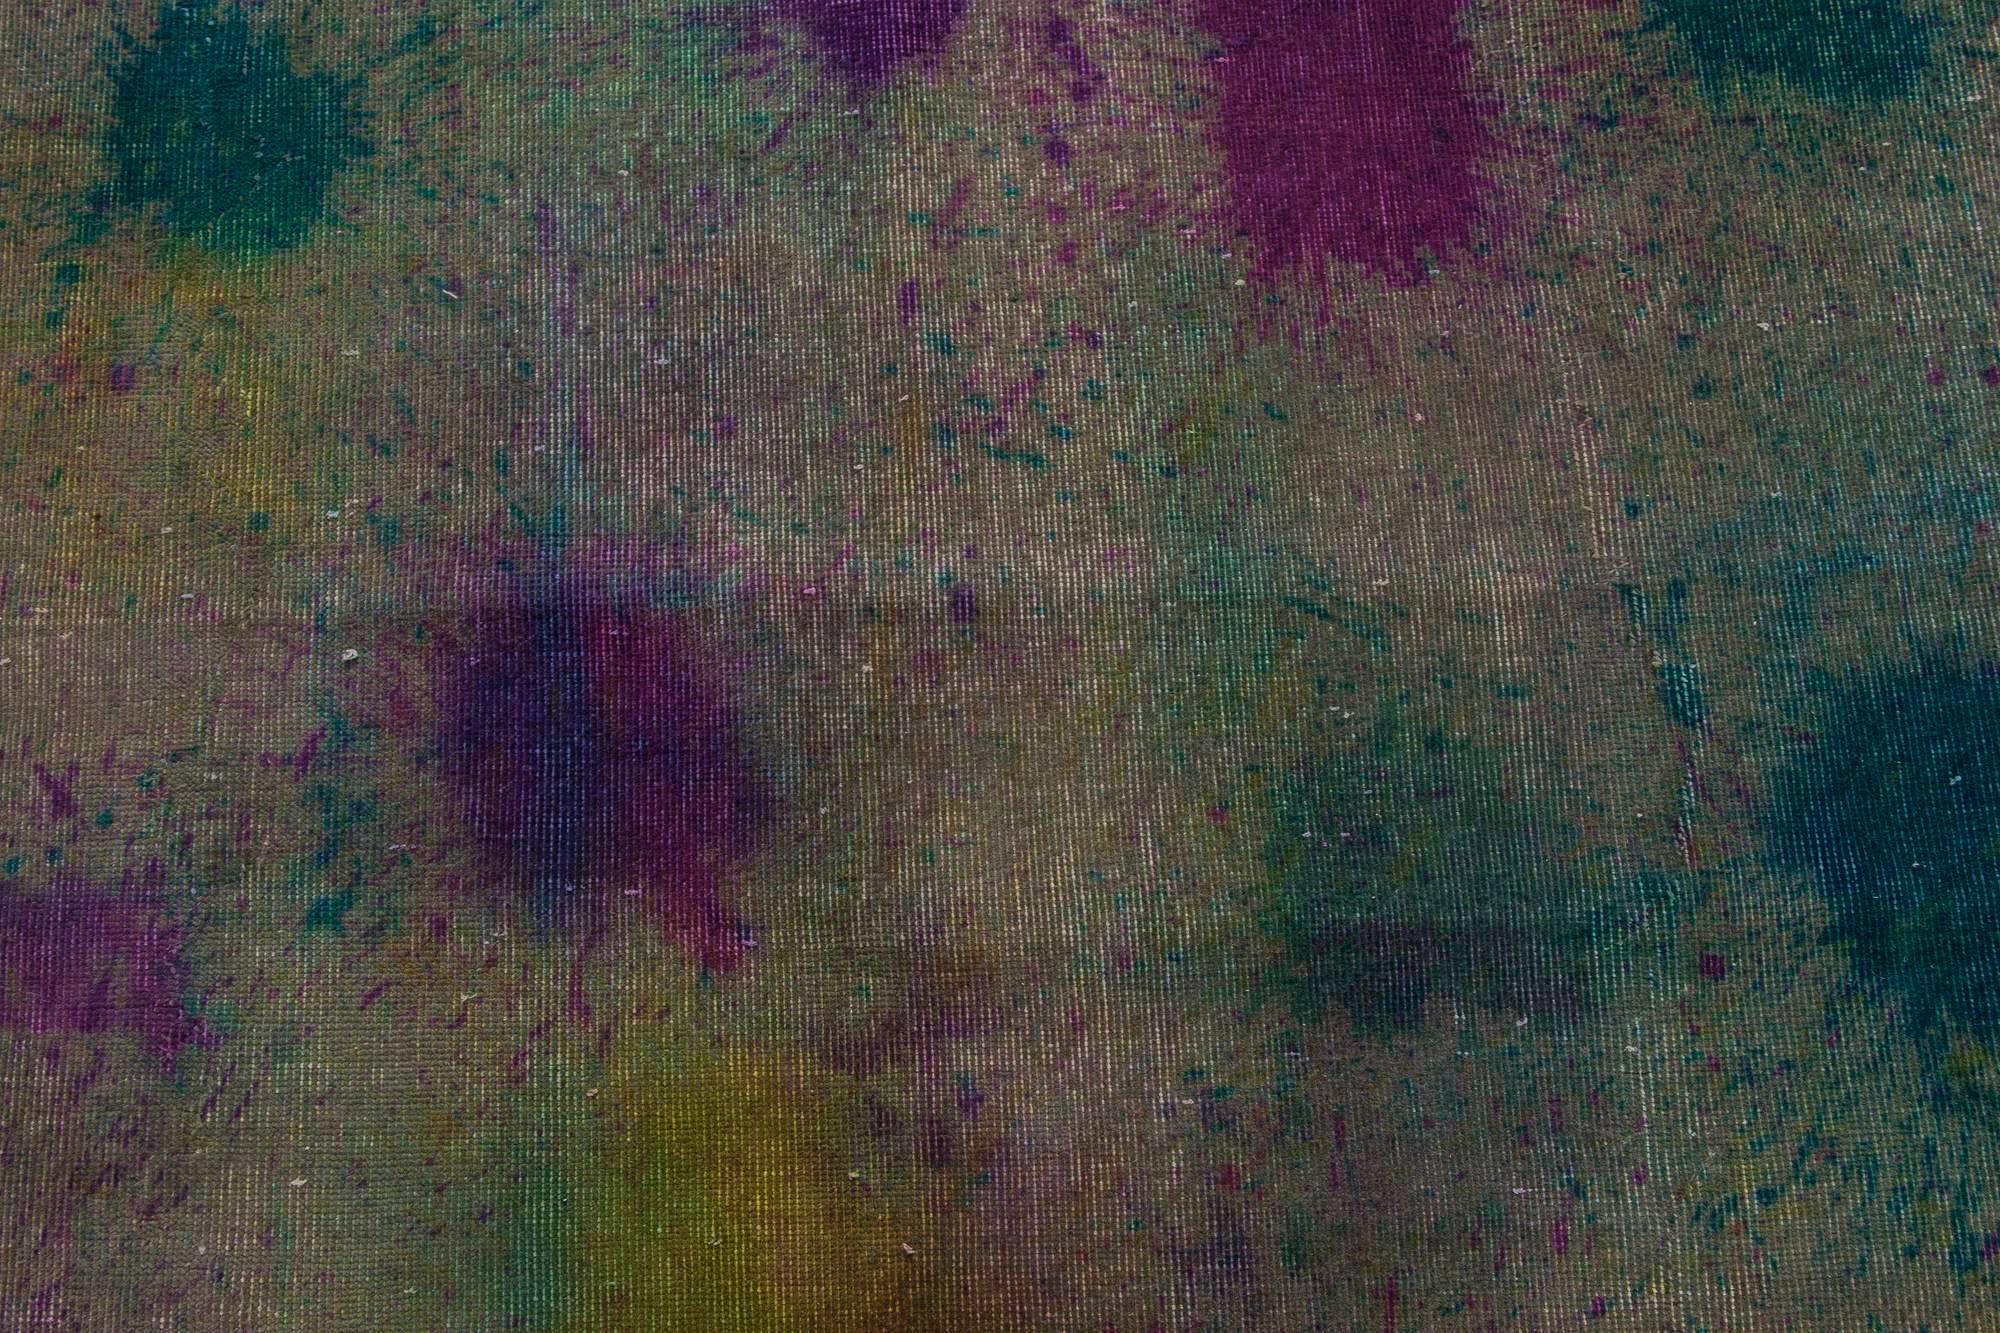 Contemporary Abstract Daliesque handmde wool rug by Doris Leslie Blau
Size: 7'10